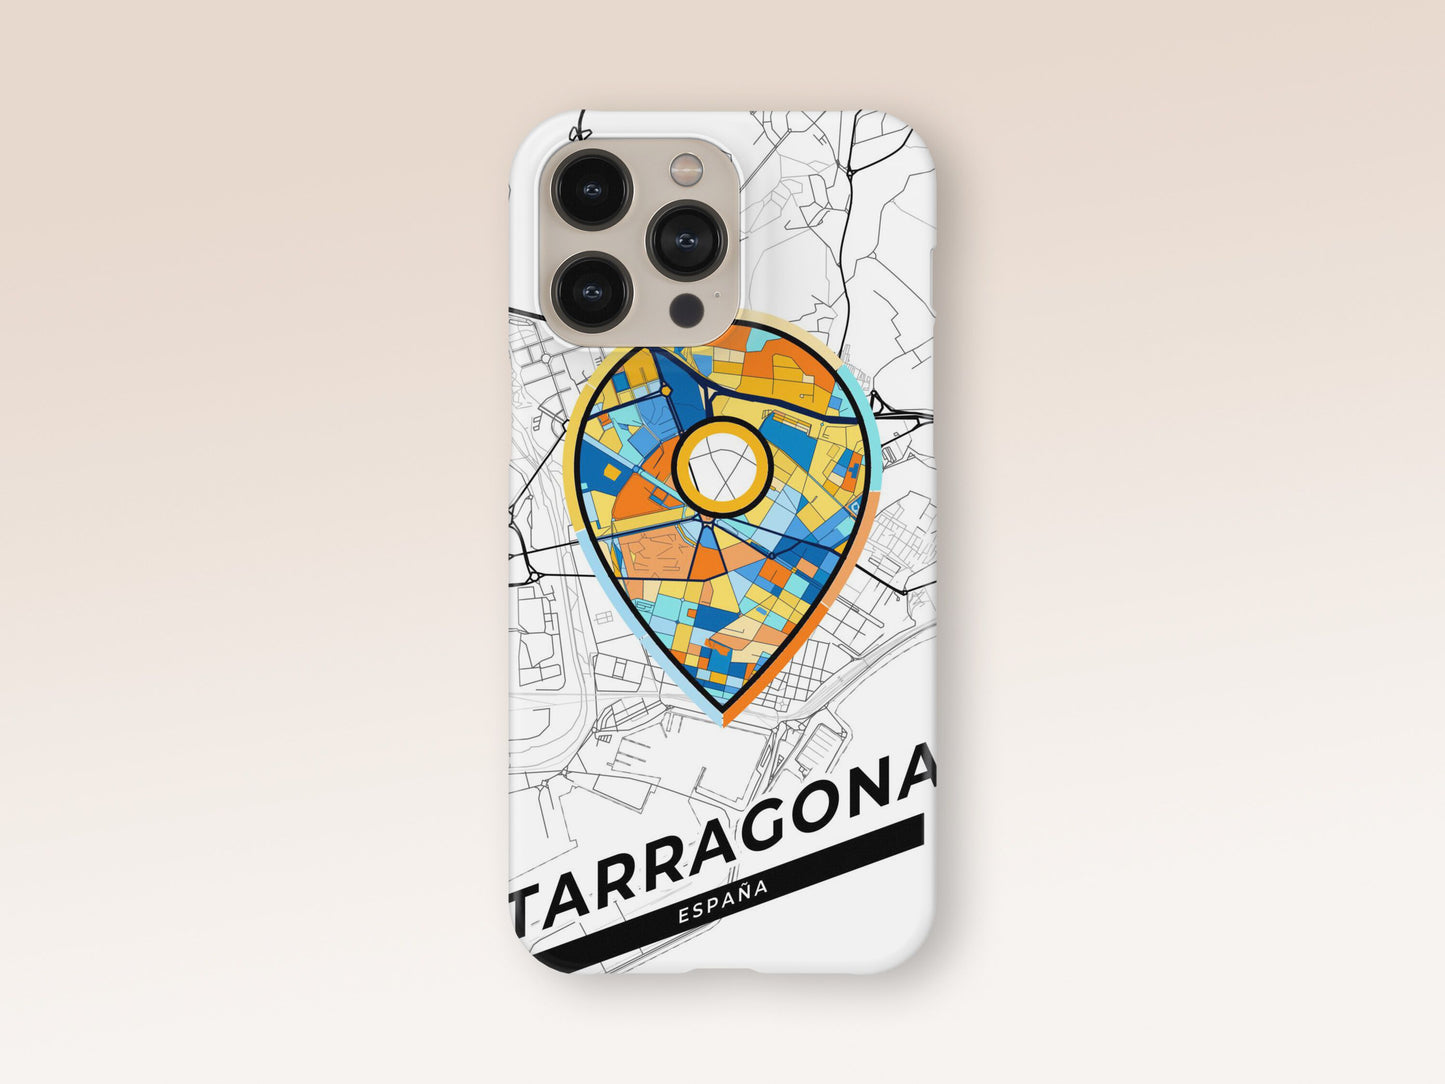 Tarragona Spain slim phone case with colorful icon 1